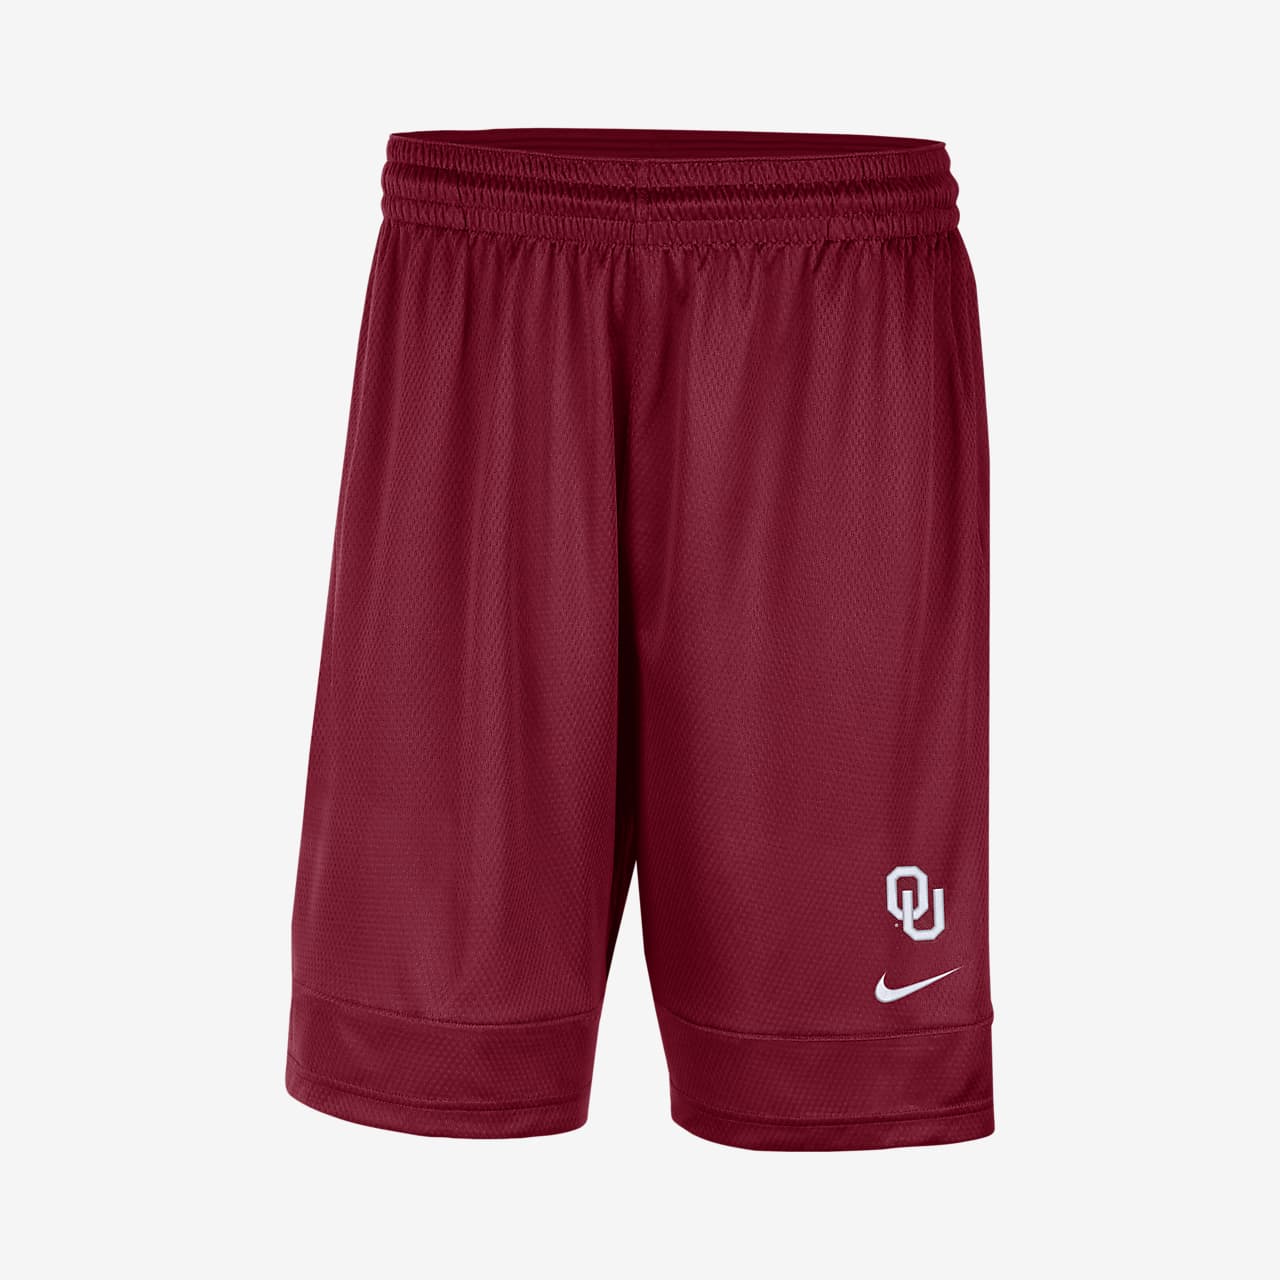 Nike College (Oklahoma) Men's Shorts